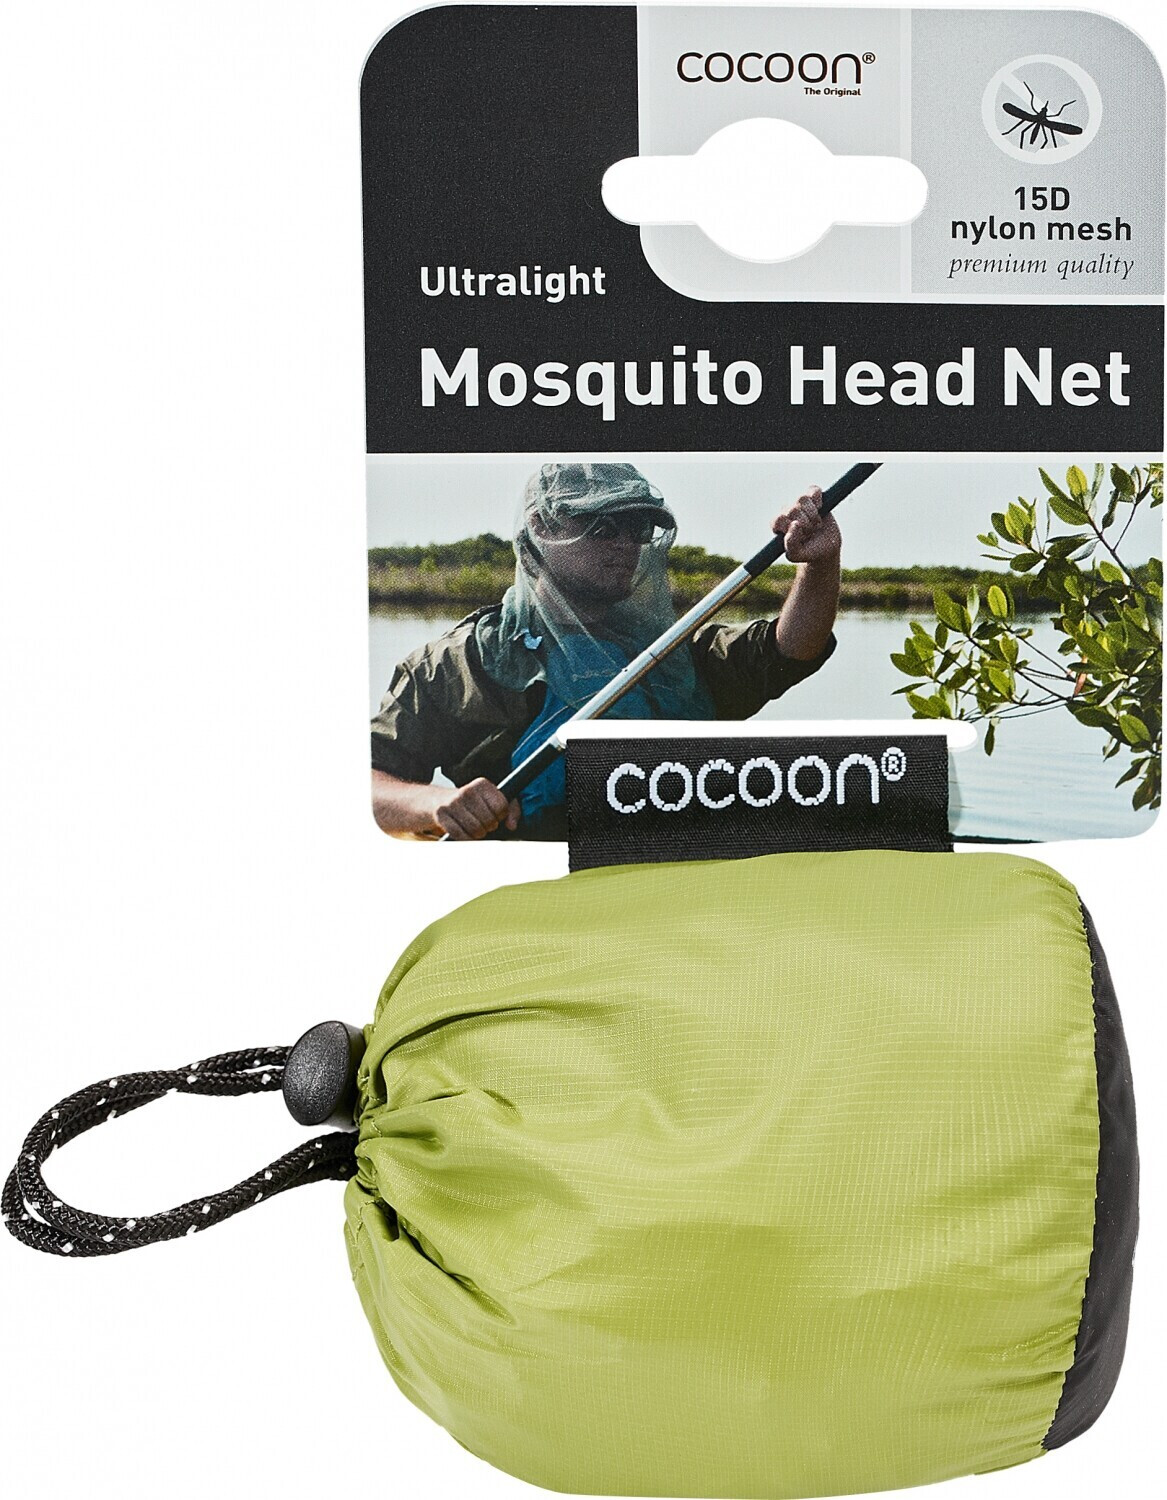 Cocoon Mosquito Head Net Ultralight schilfgrün ab 11,49 €